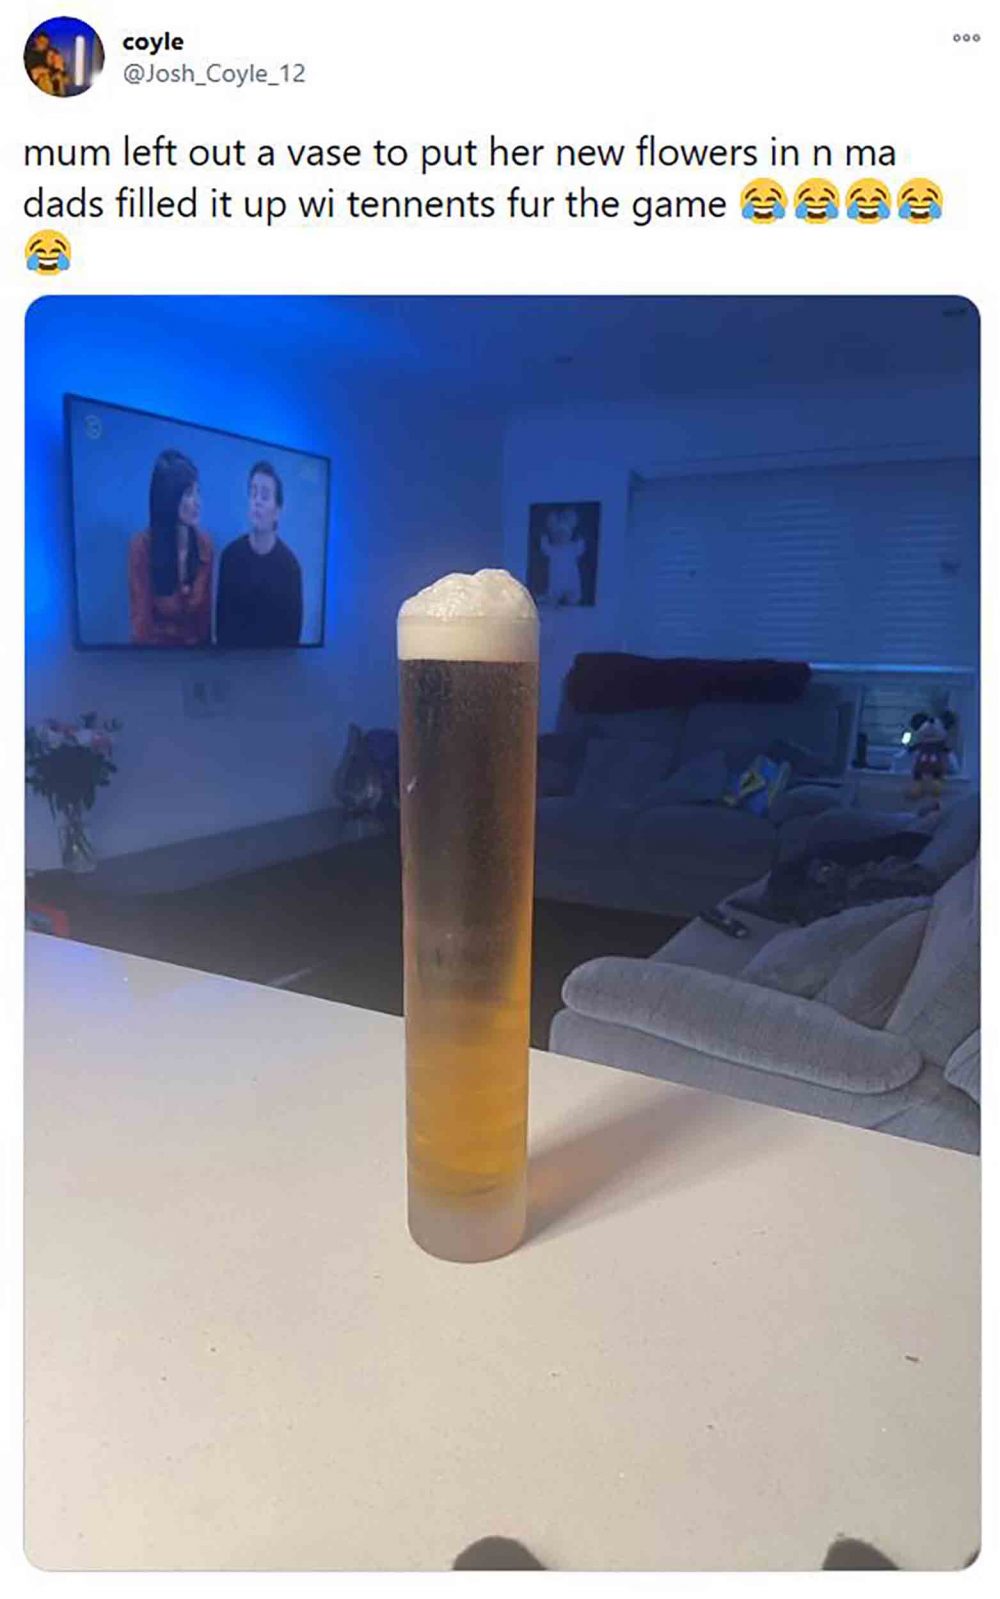 A vase full of beer